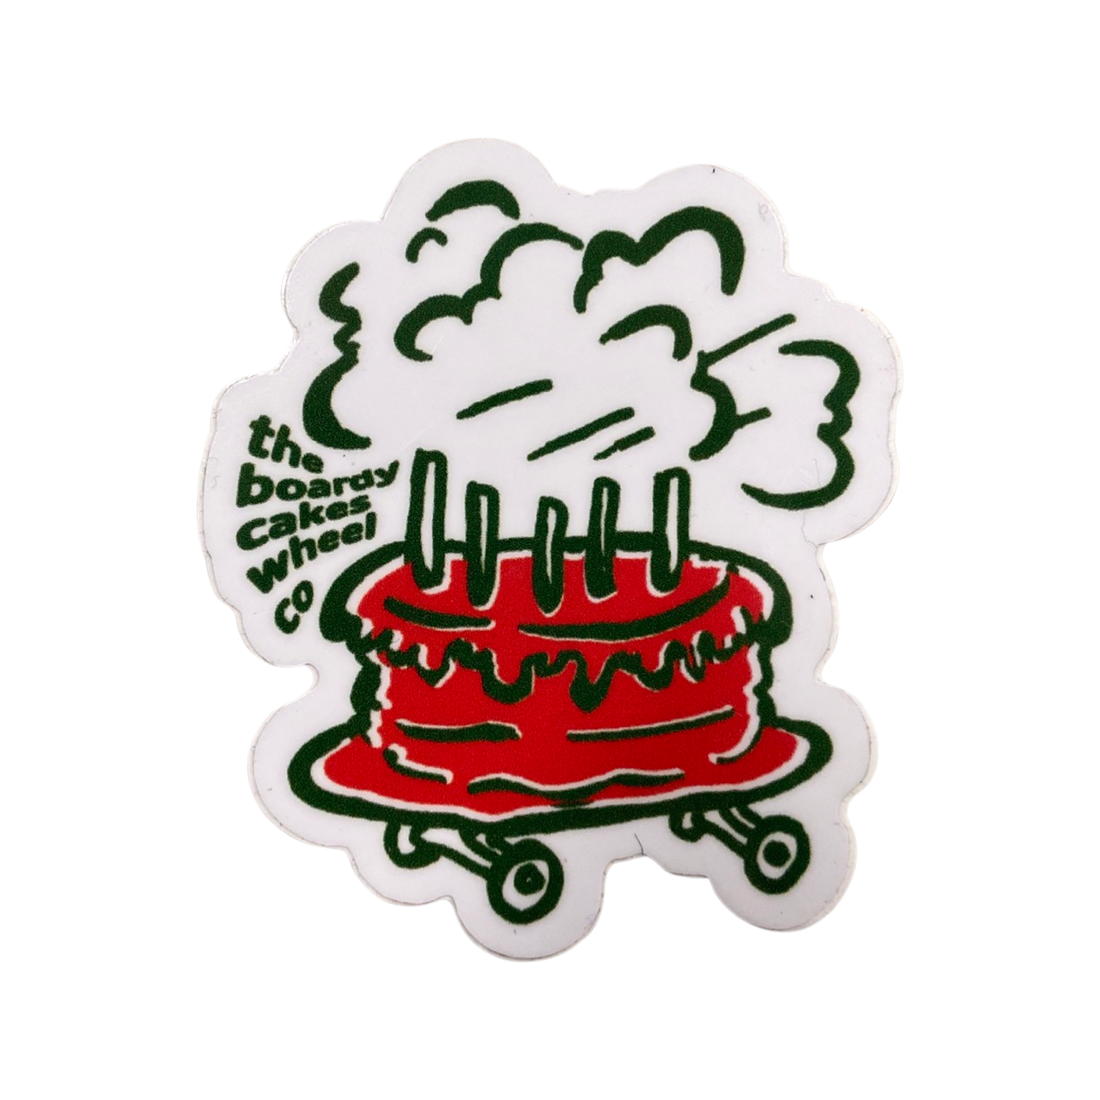 Boardy Cakes Wheels Red Cake Sticker 1.5"